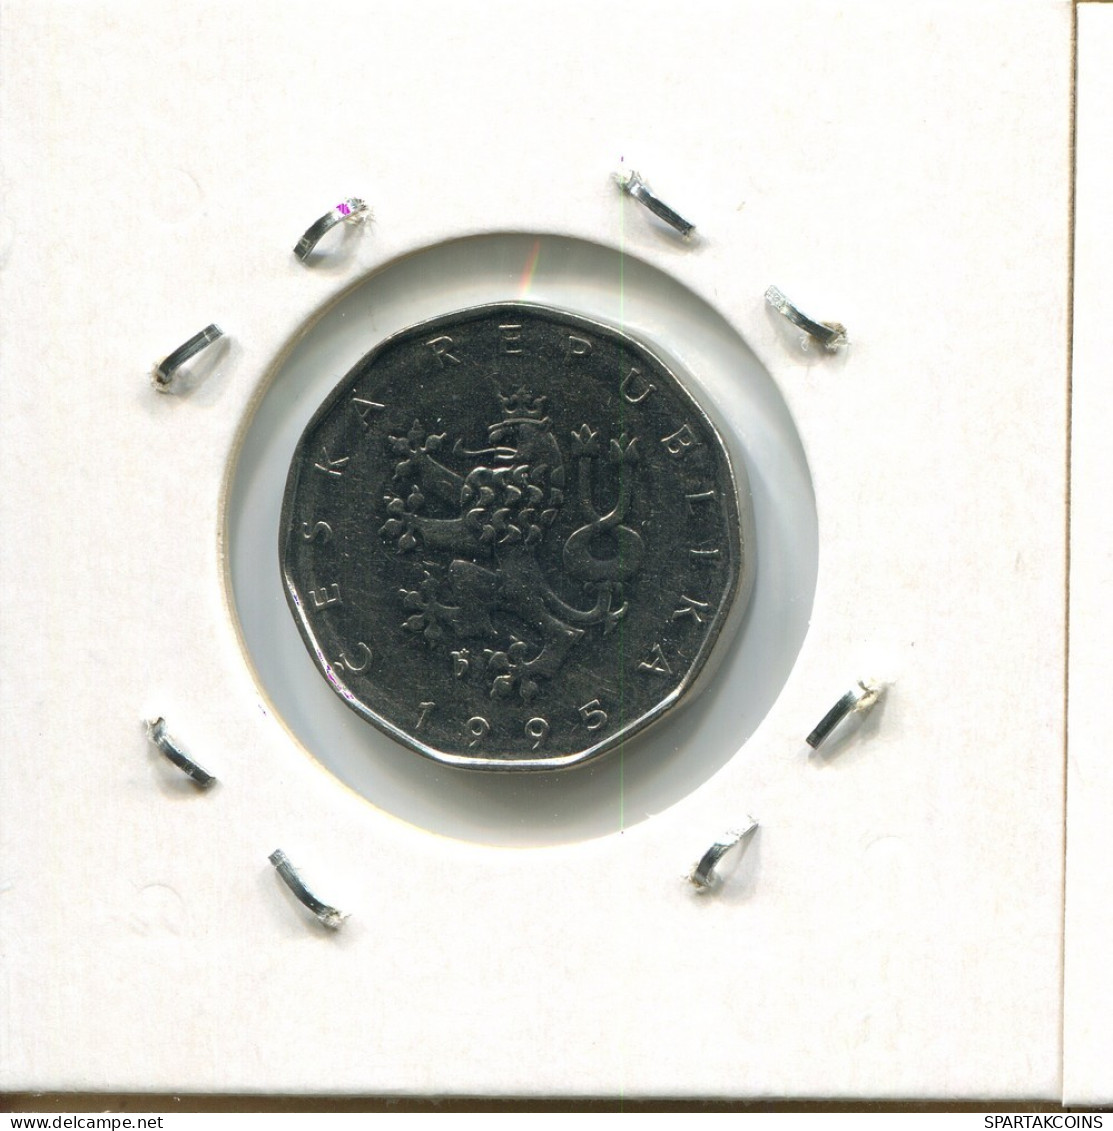 2 KORUN 1995 CZECH REPUBLIC Coin #AP753.2.U.A - República Checa